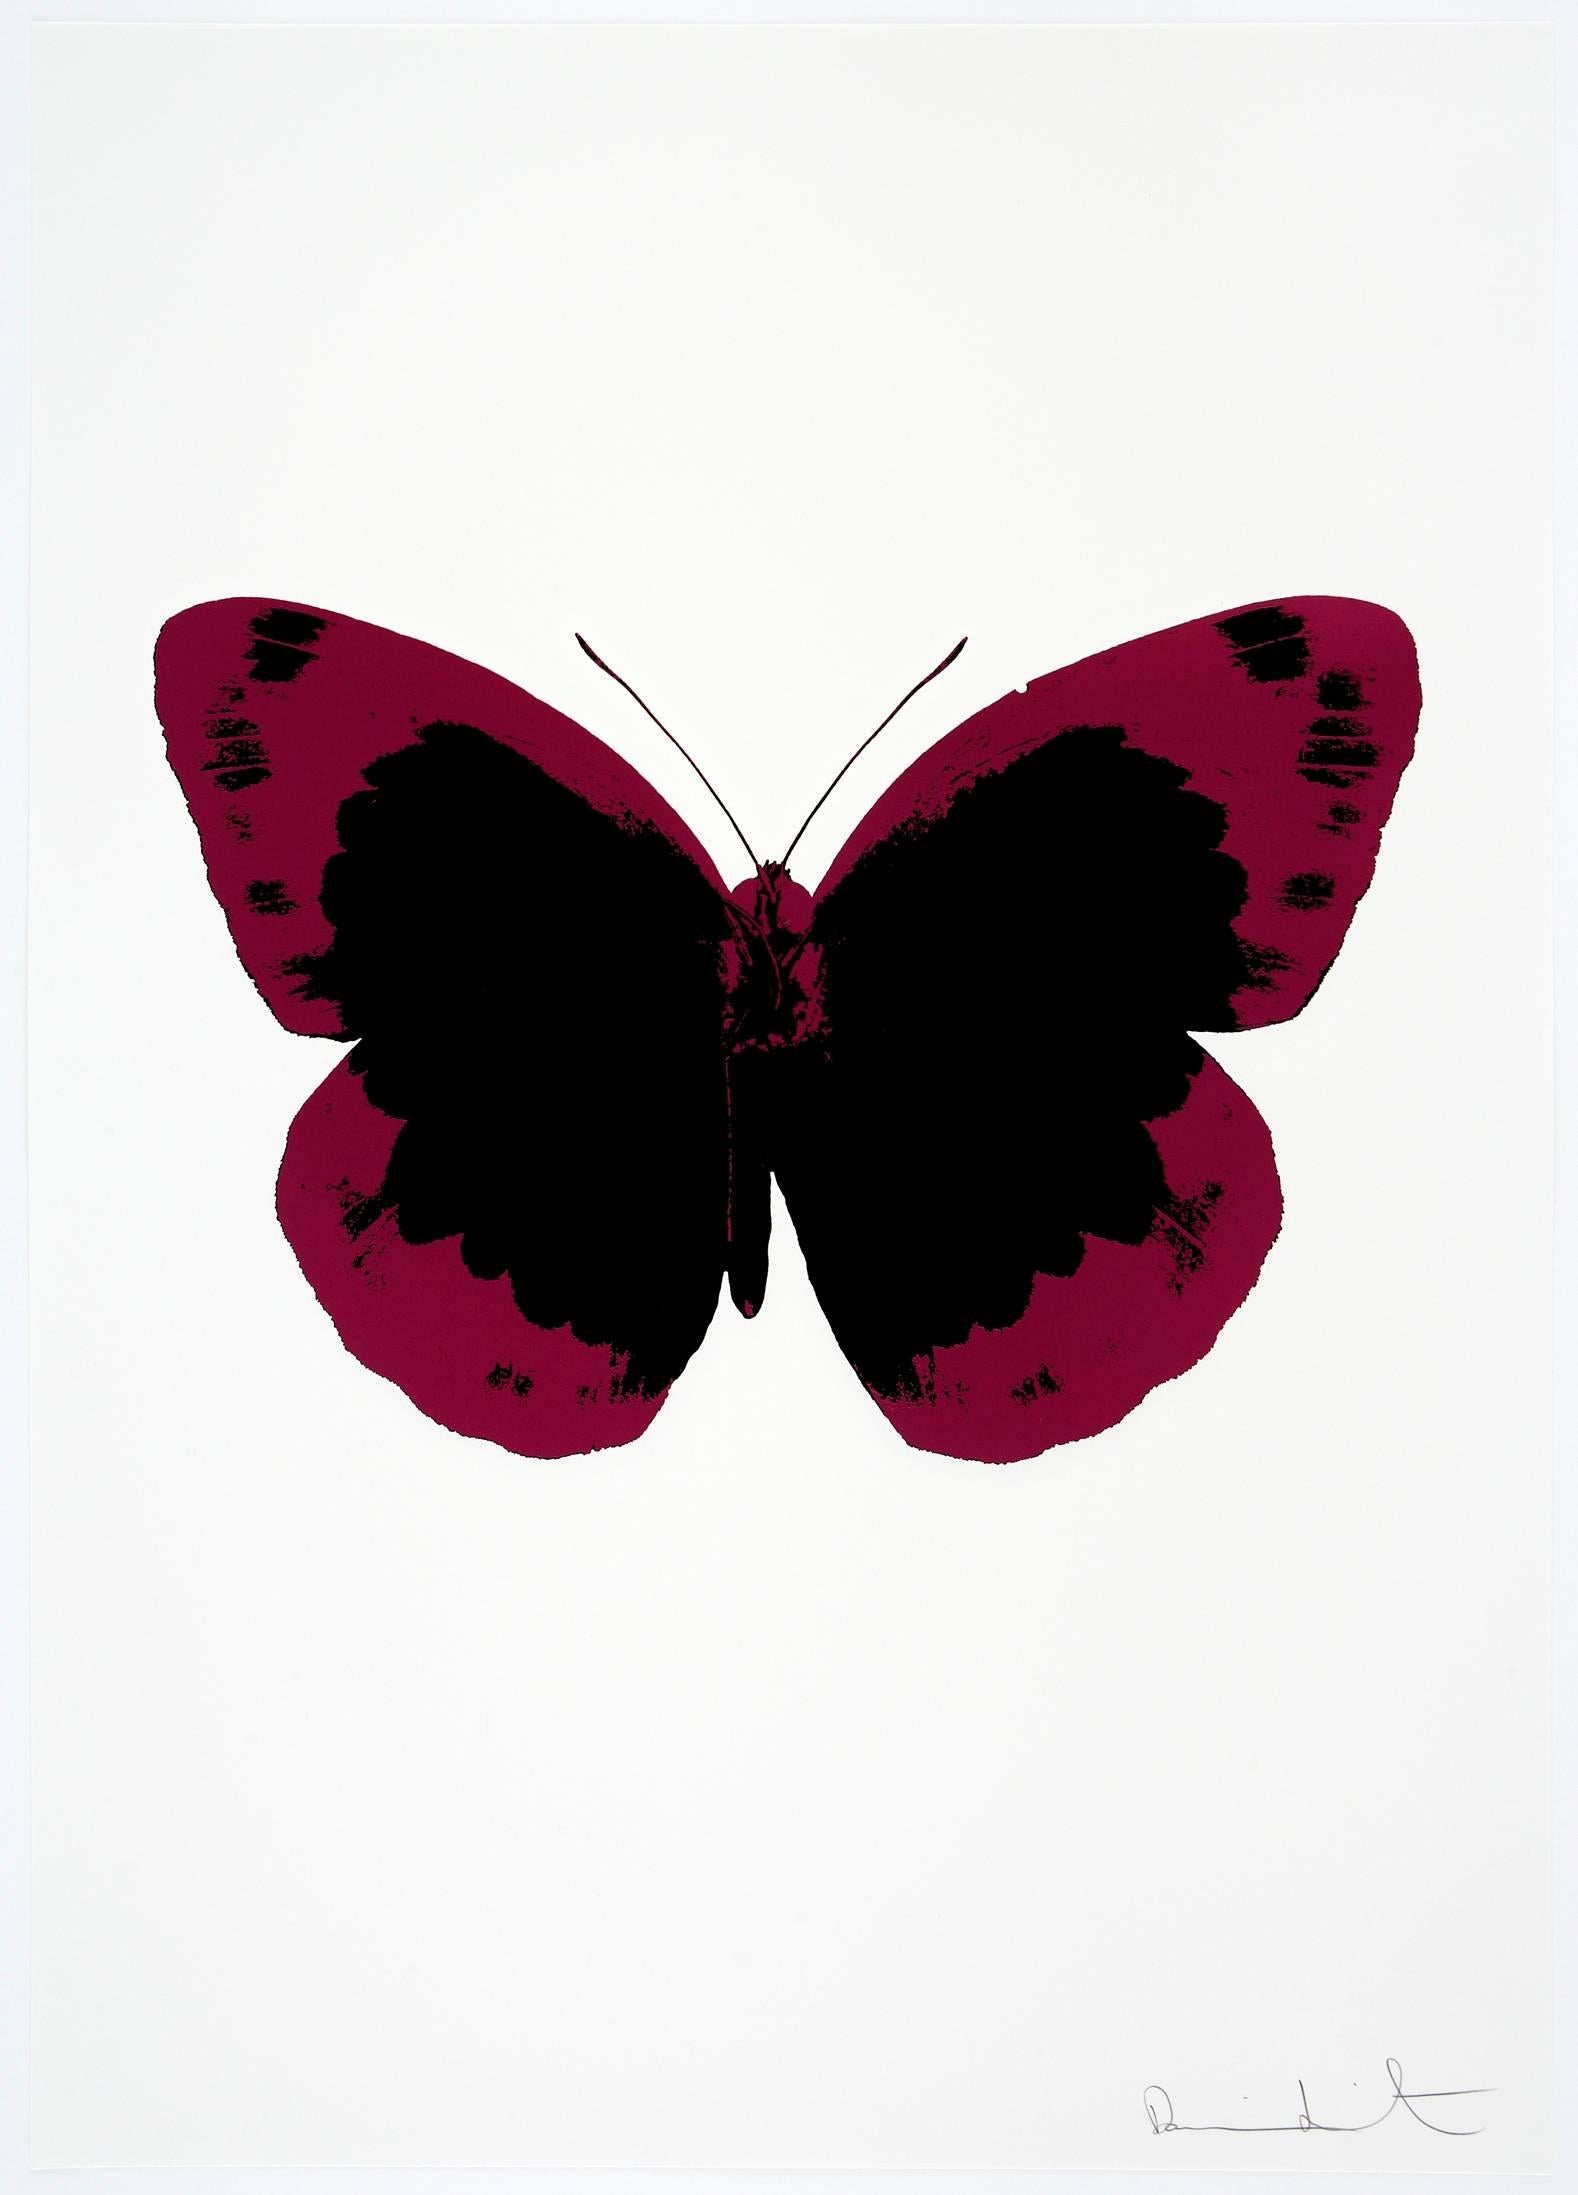 Damien Hirst Animal Print - The Souls II - Raven Black/Fuchsia Pink/Blind Impression